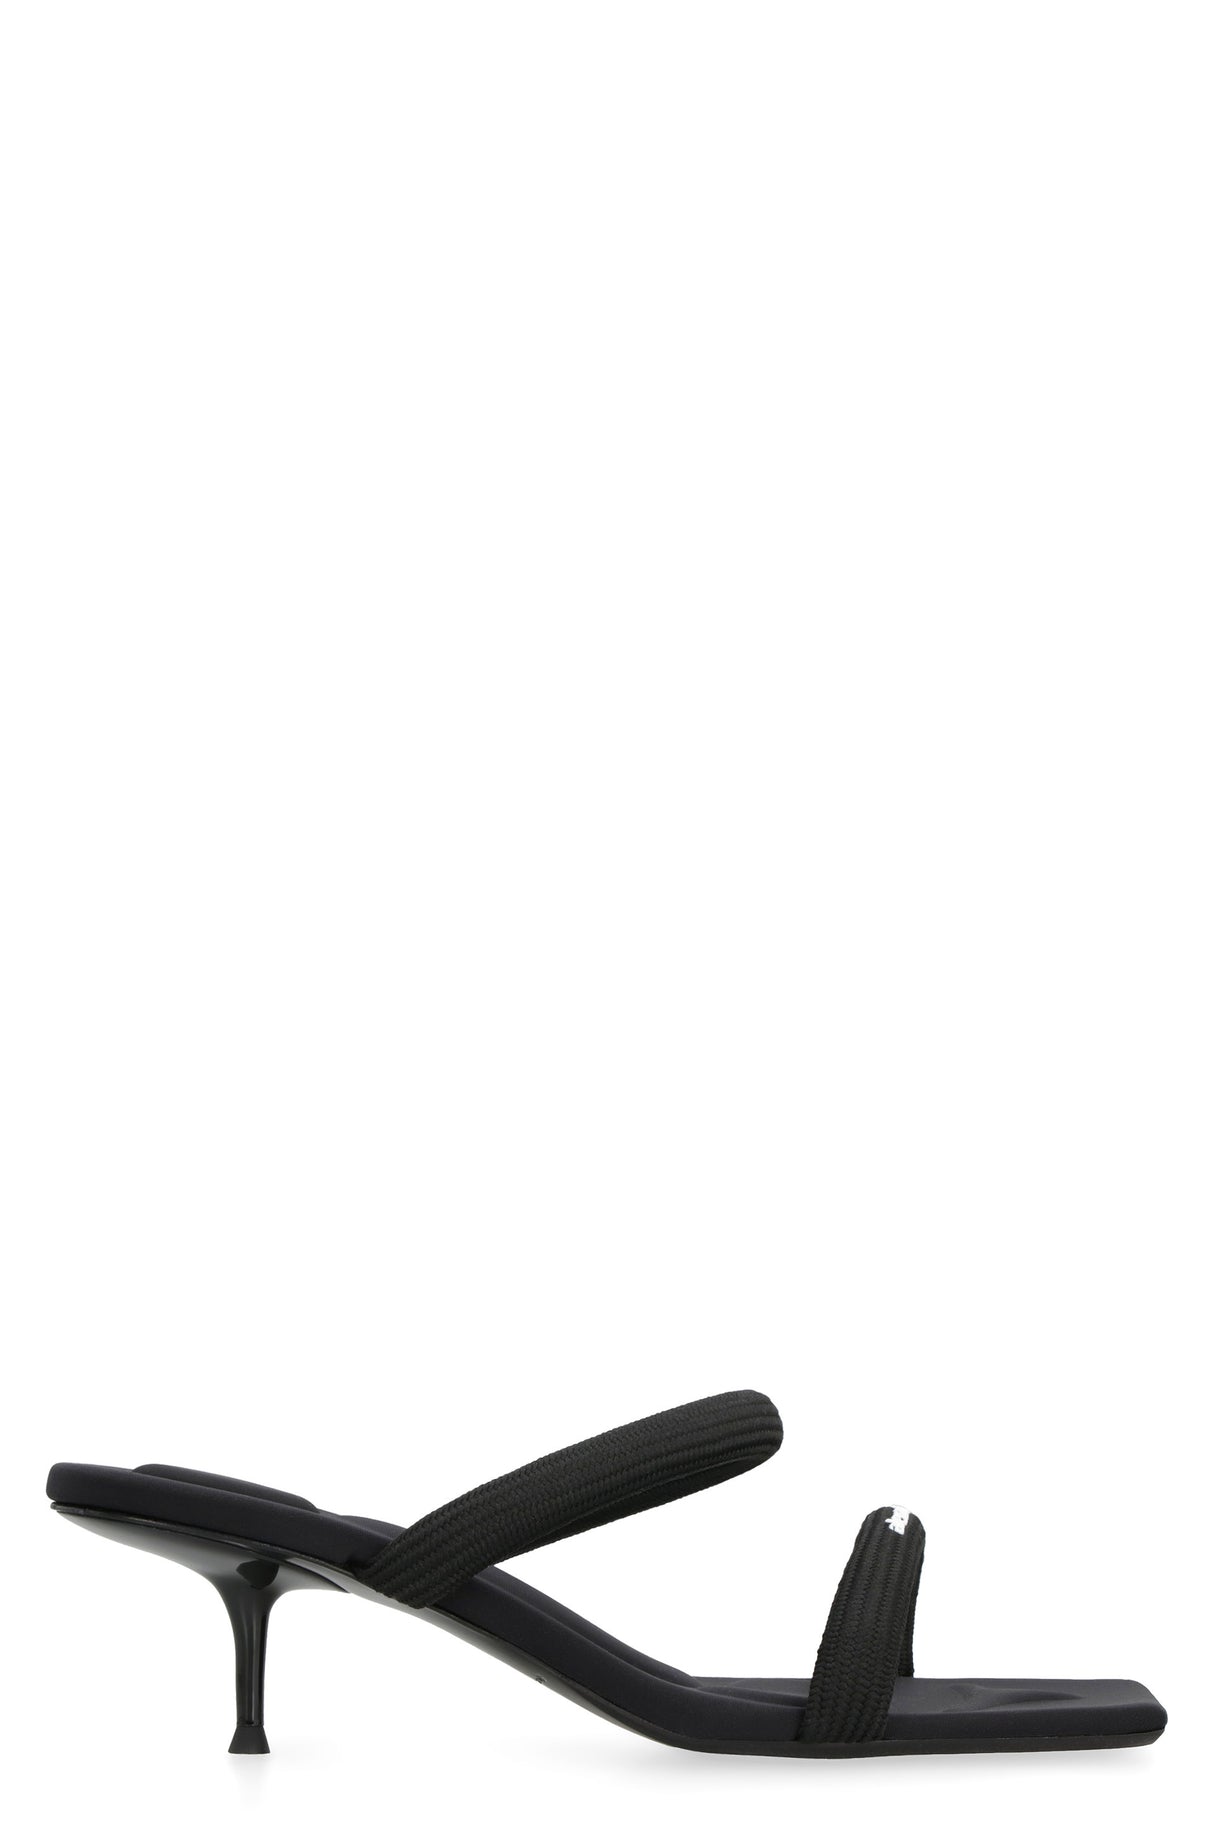 ALEXANDER WANG Elegant Black Jessica Heeled Sandals for Women - FW23 Collection